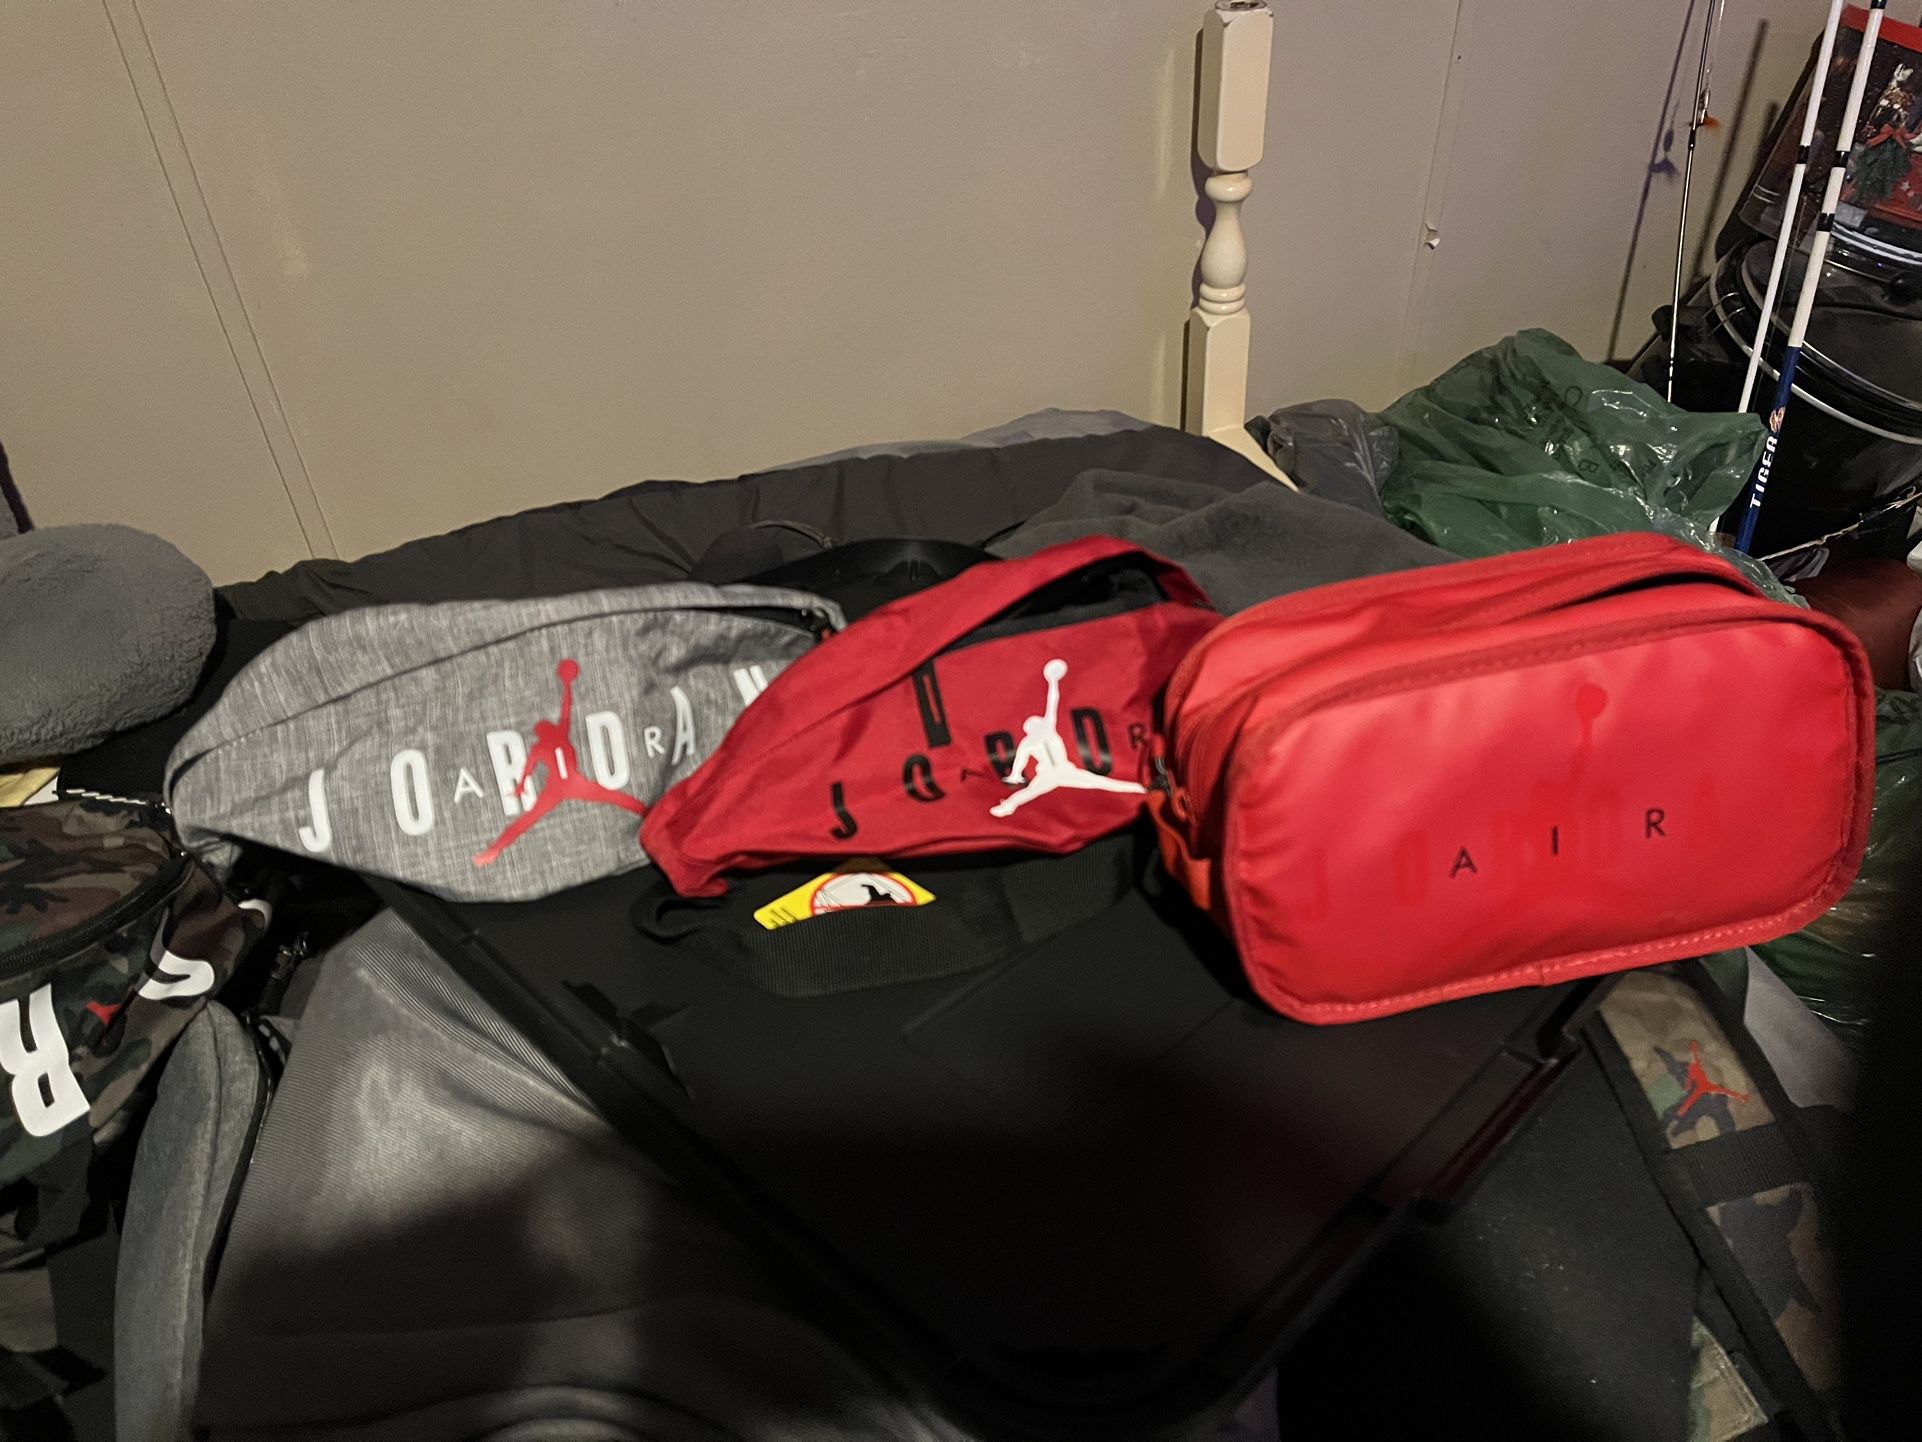 Jordan Carrying Bag With Two Belt Bags